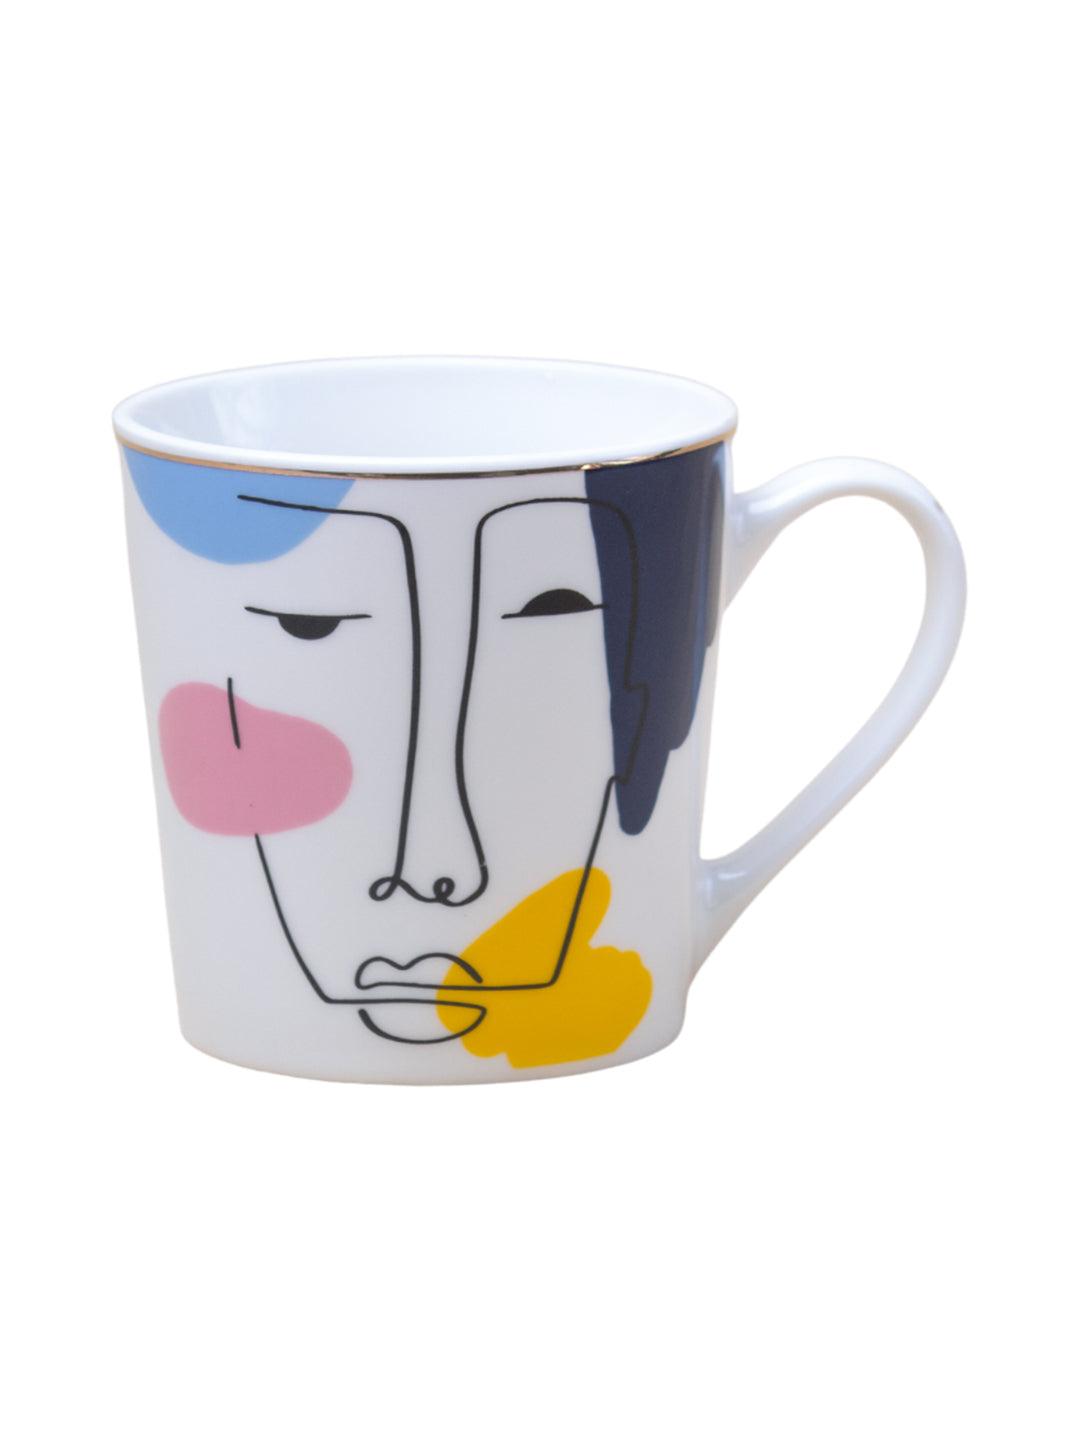 Multicolor Ceramic Coffee Mug 450 Ml - Face Sketch, Cups & Mugs - 2